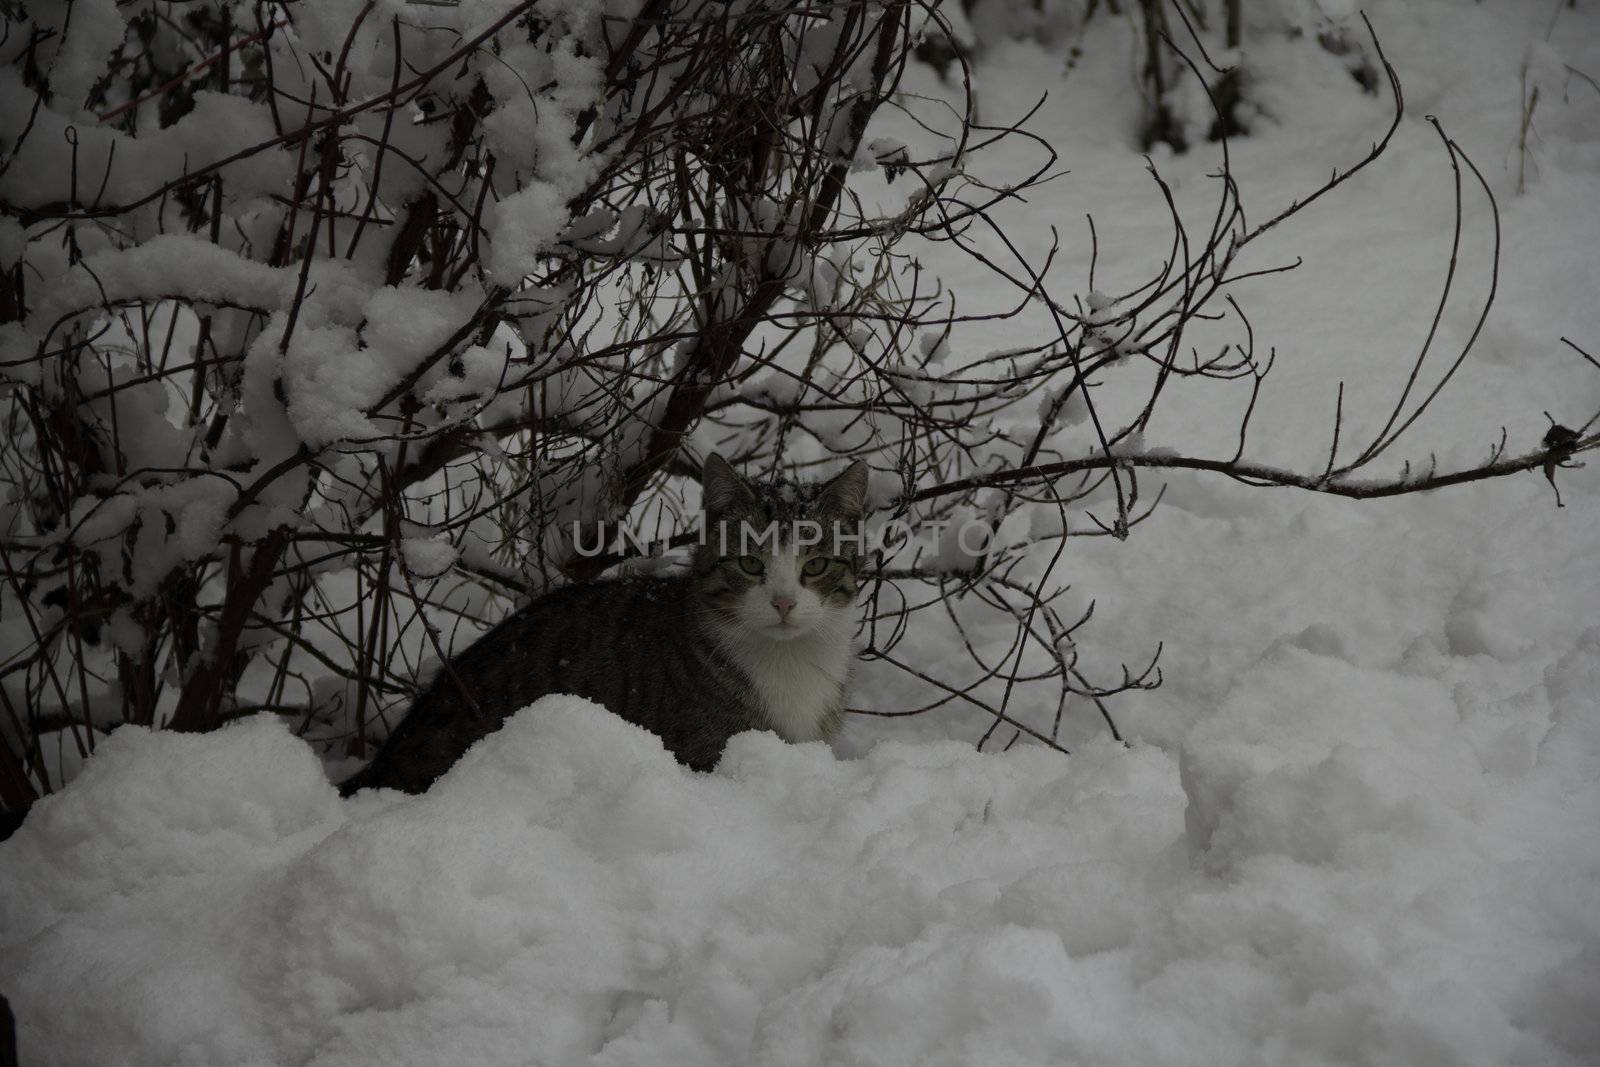 cat in the snow by poziomki